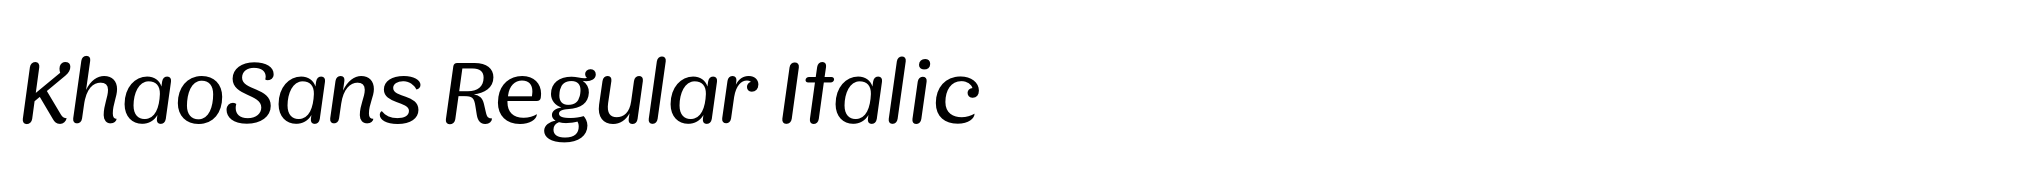 KhaoSans Regular Italic image